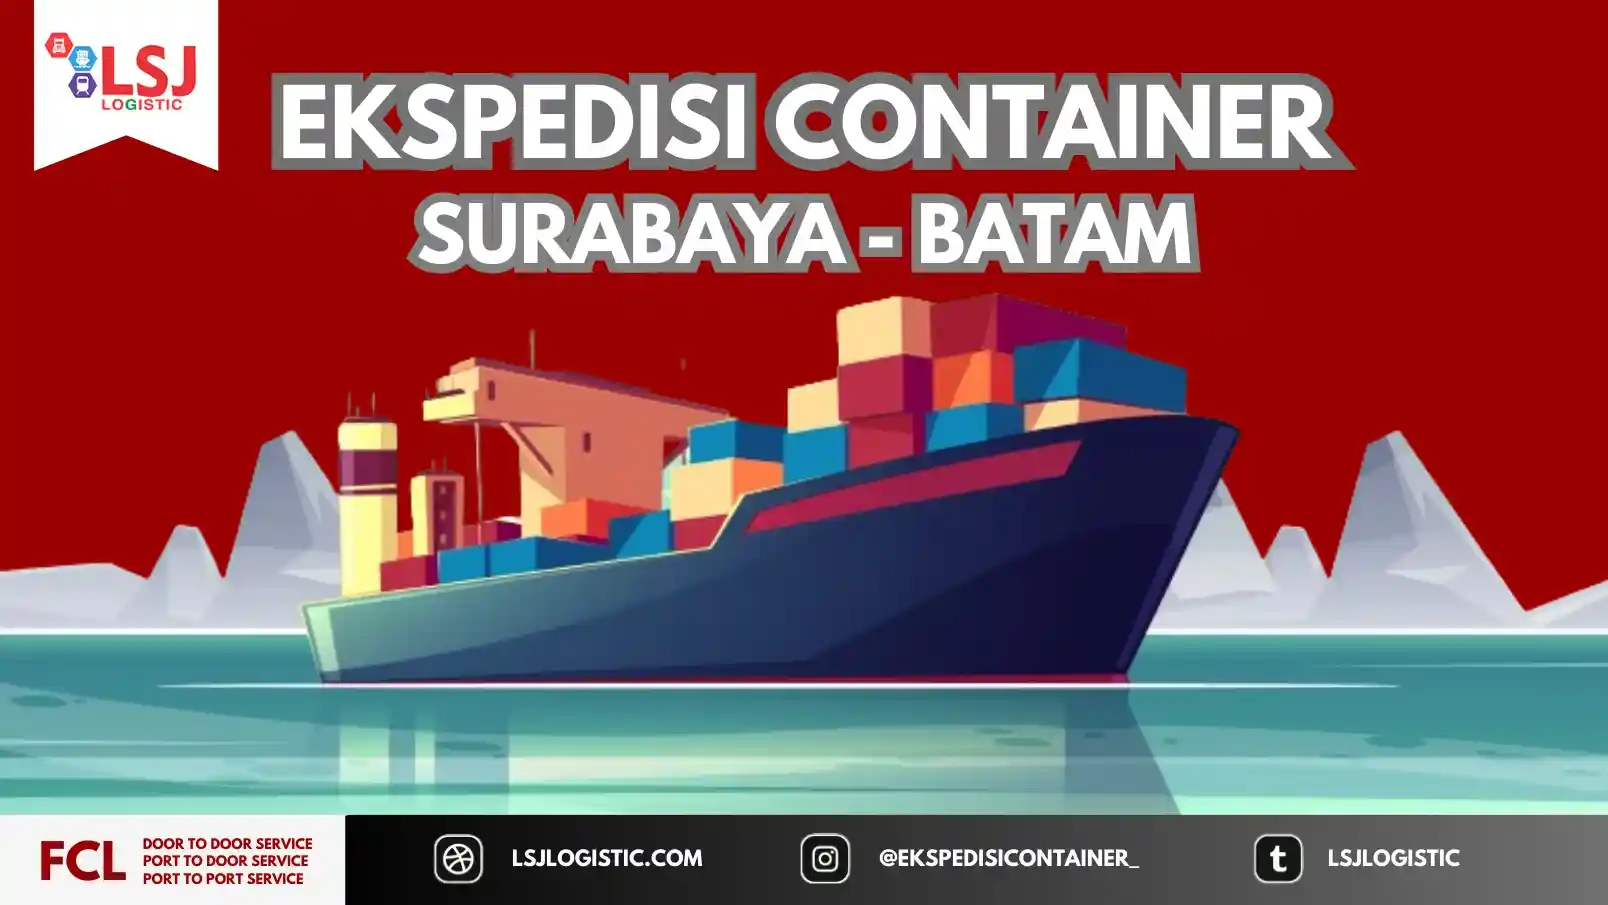 Tarif Pengiriman Container Surabaya Batam